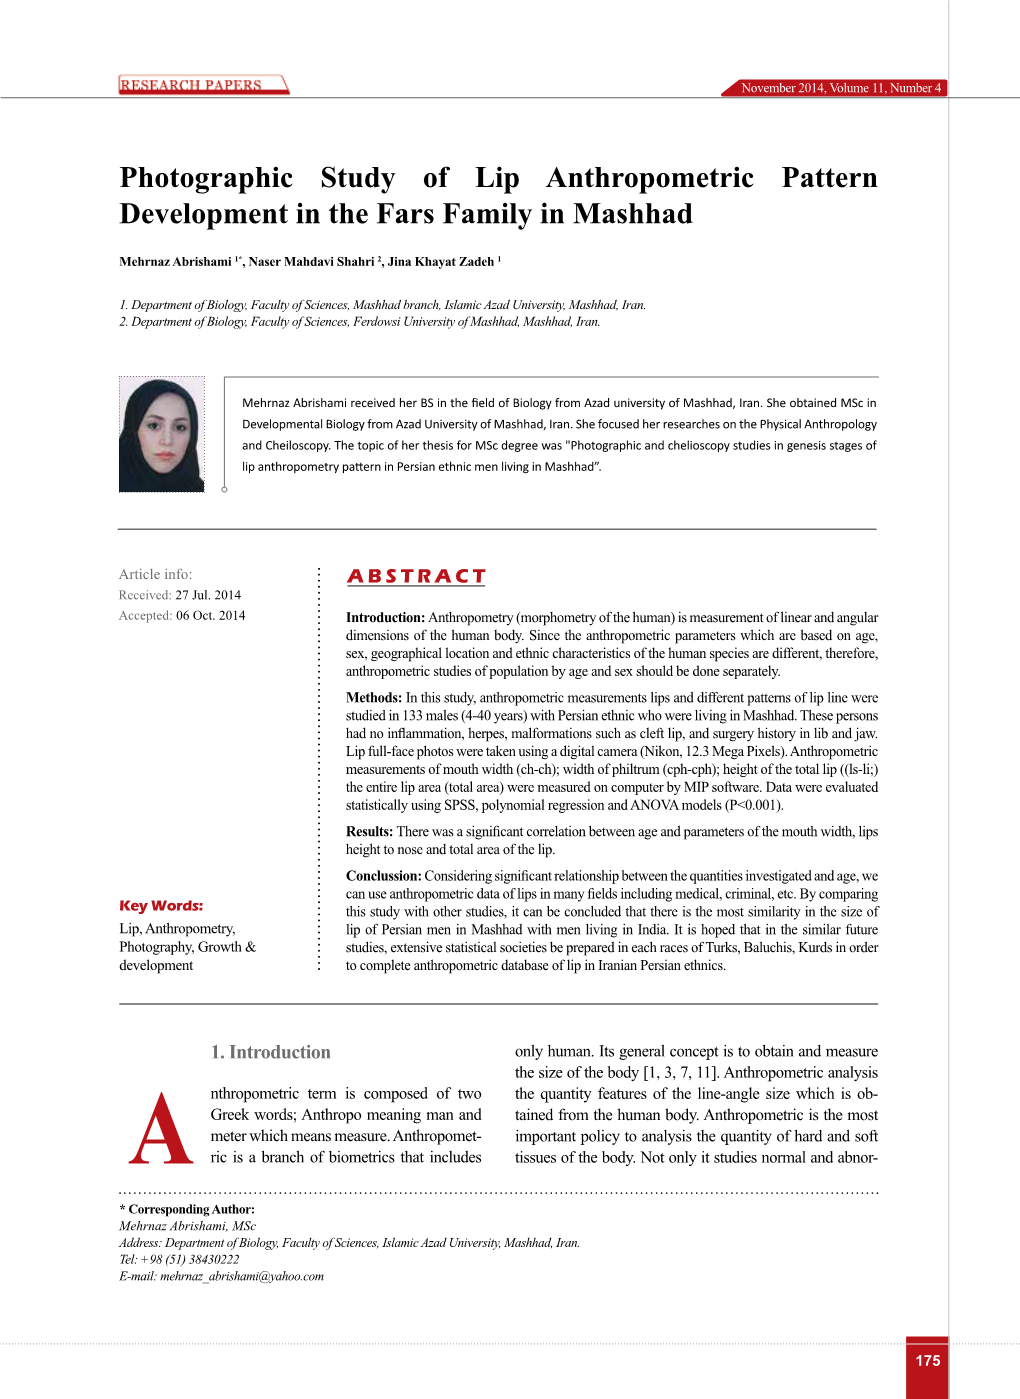 Photographic Study of Lip Anthropometric Pattern Development in the Fars Family in Mashhad